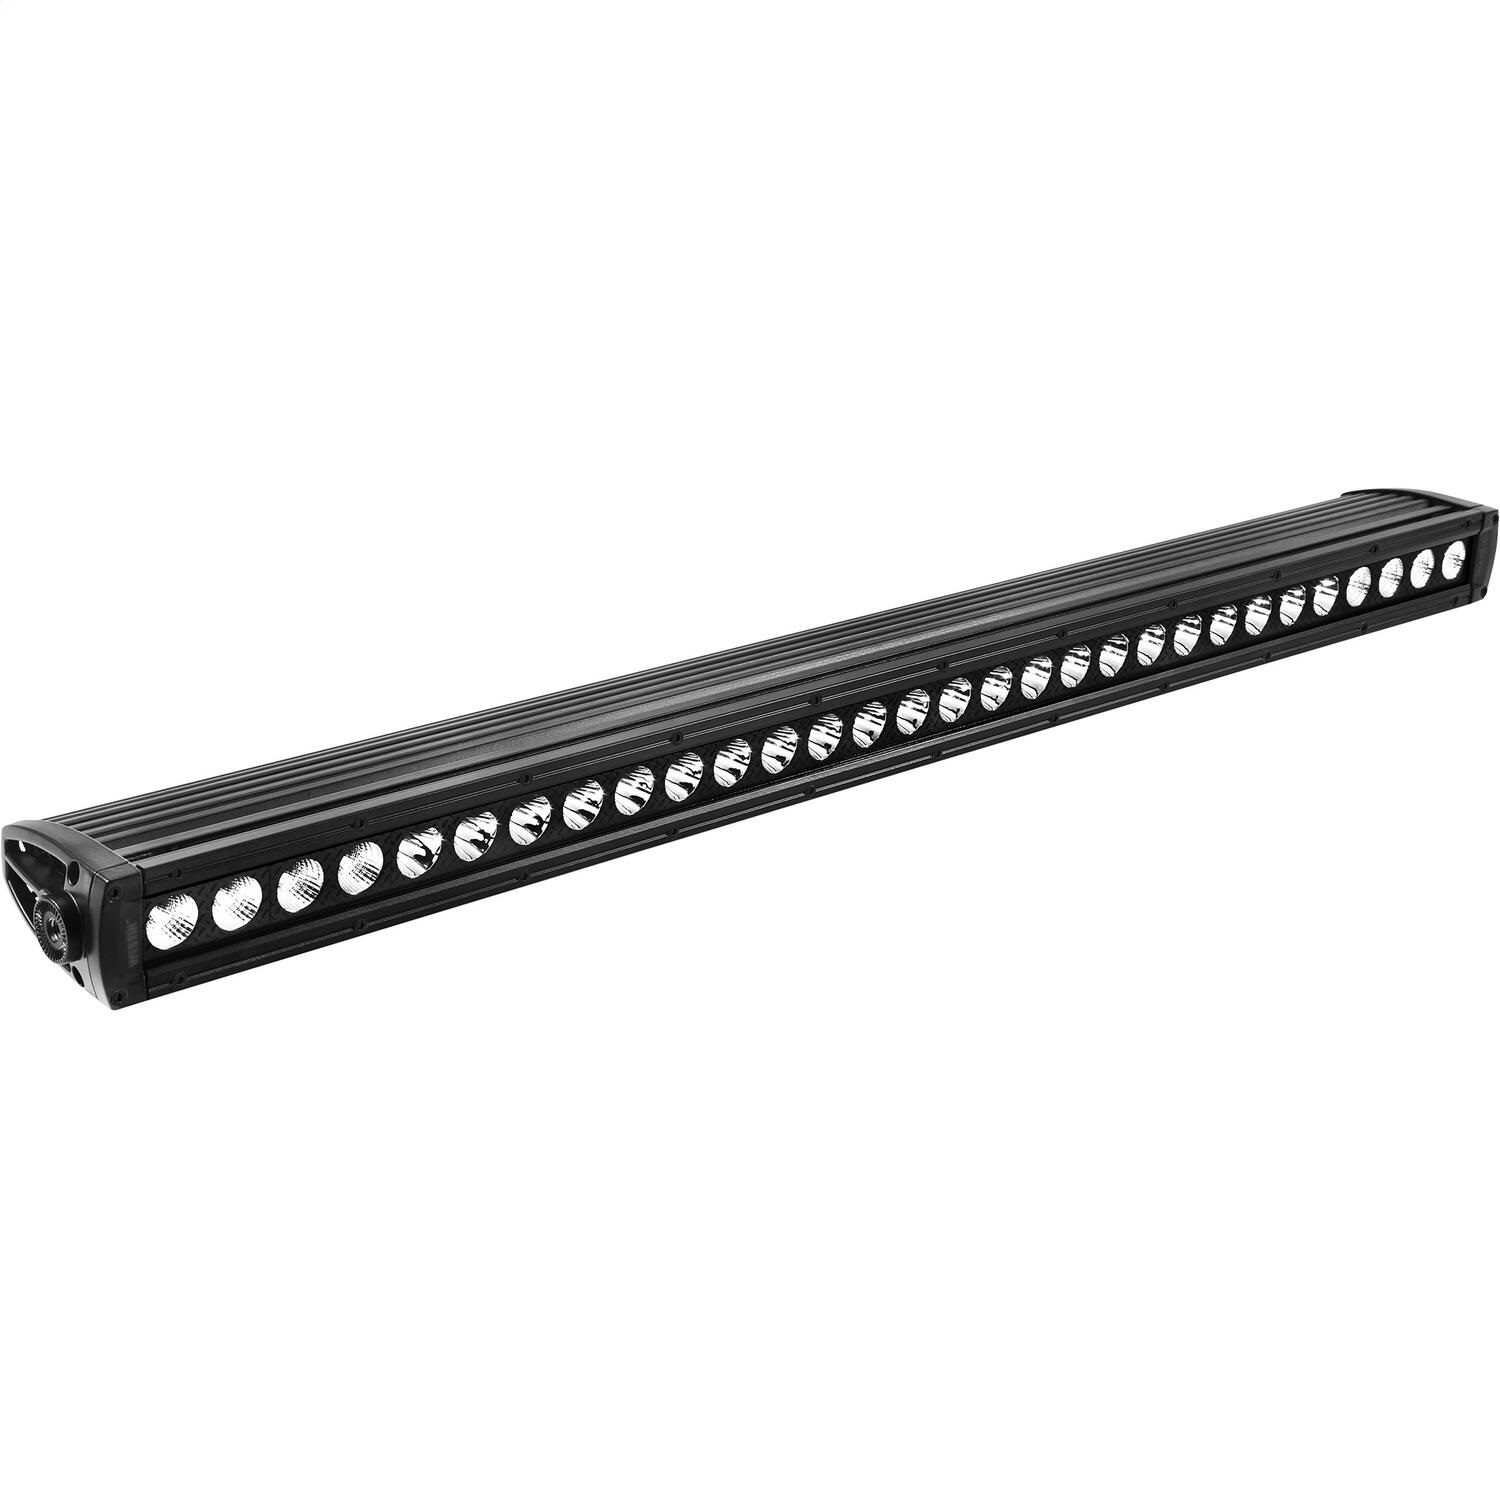 Westin 09-12211-30C B-FORCE LED Single Row Light Bar